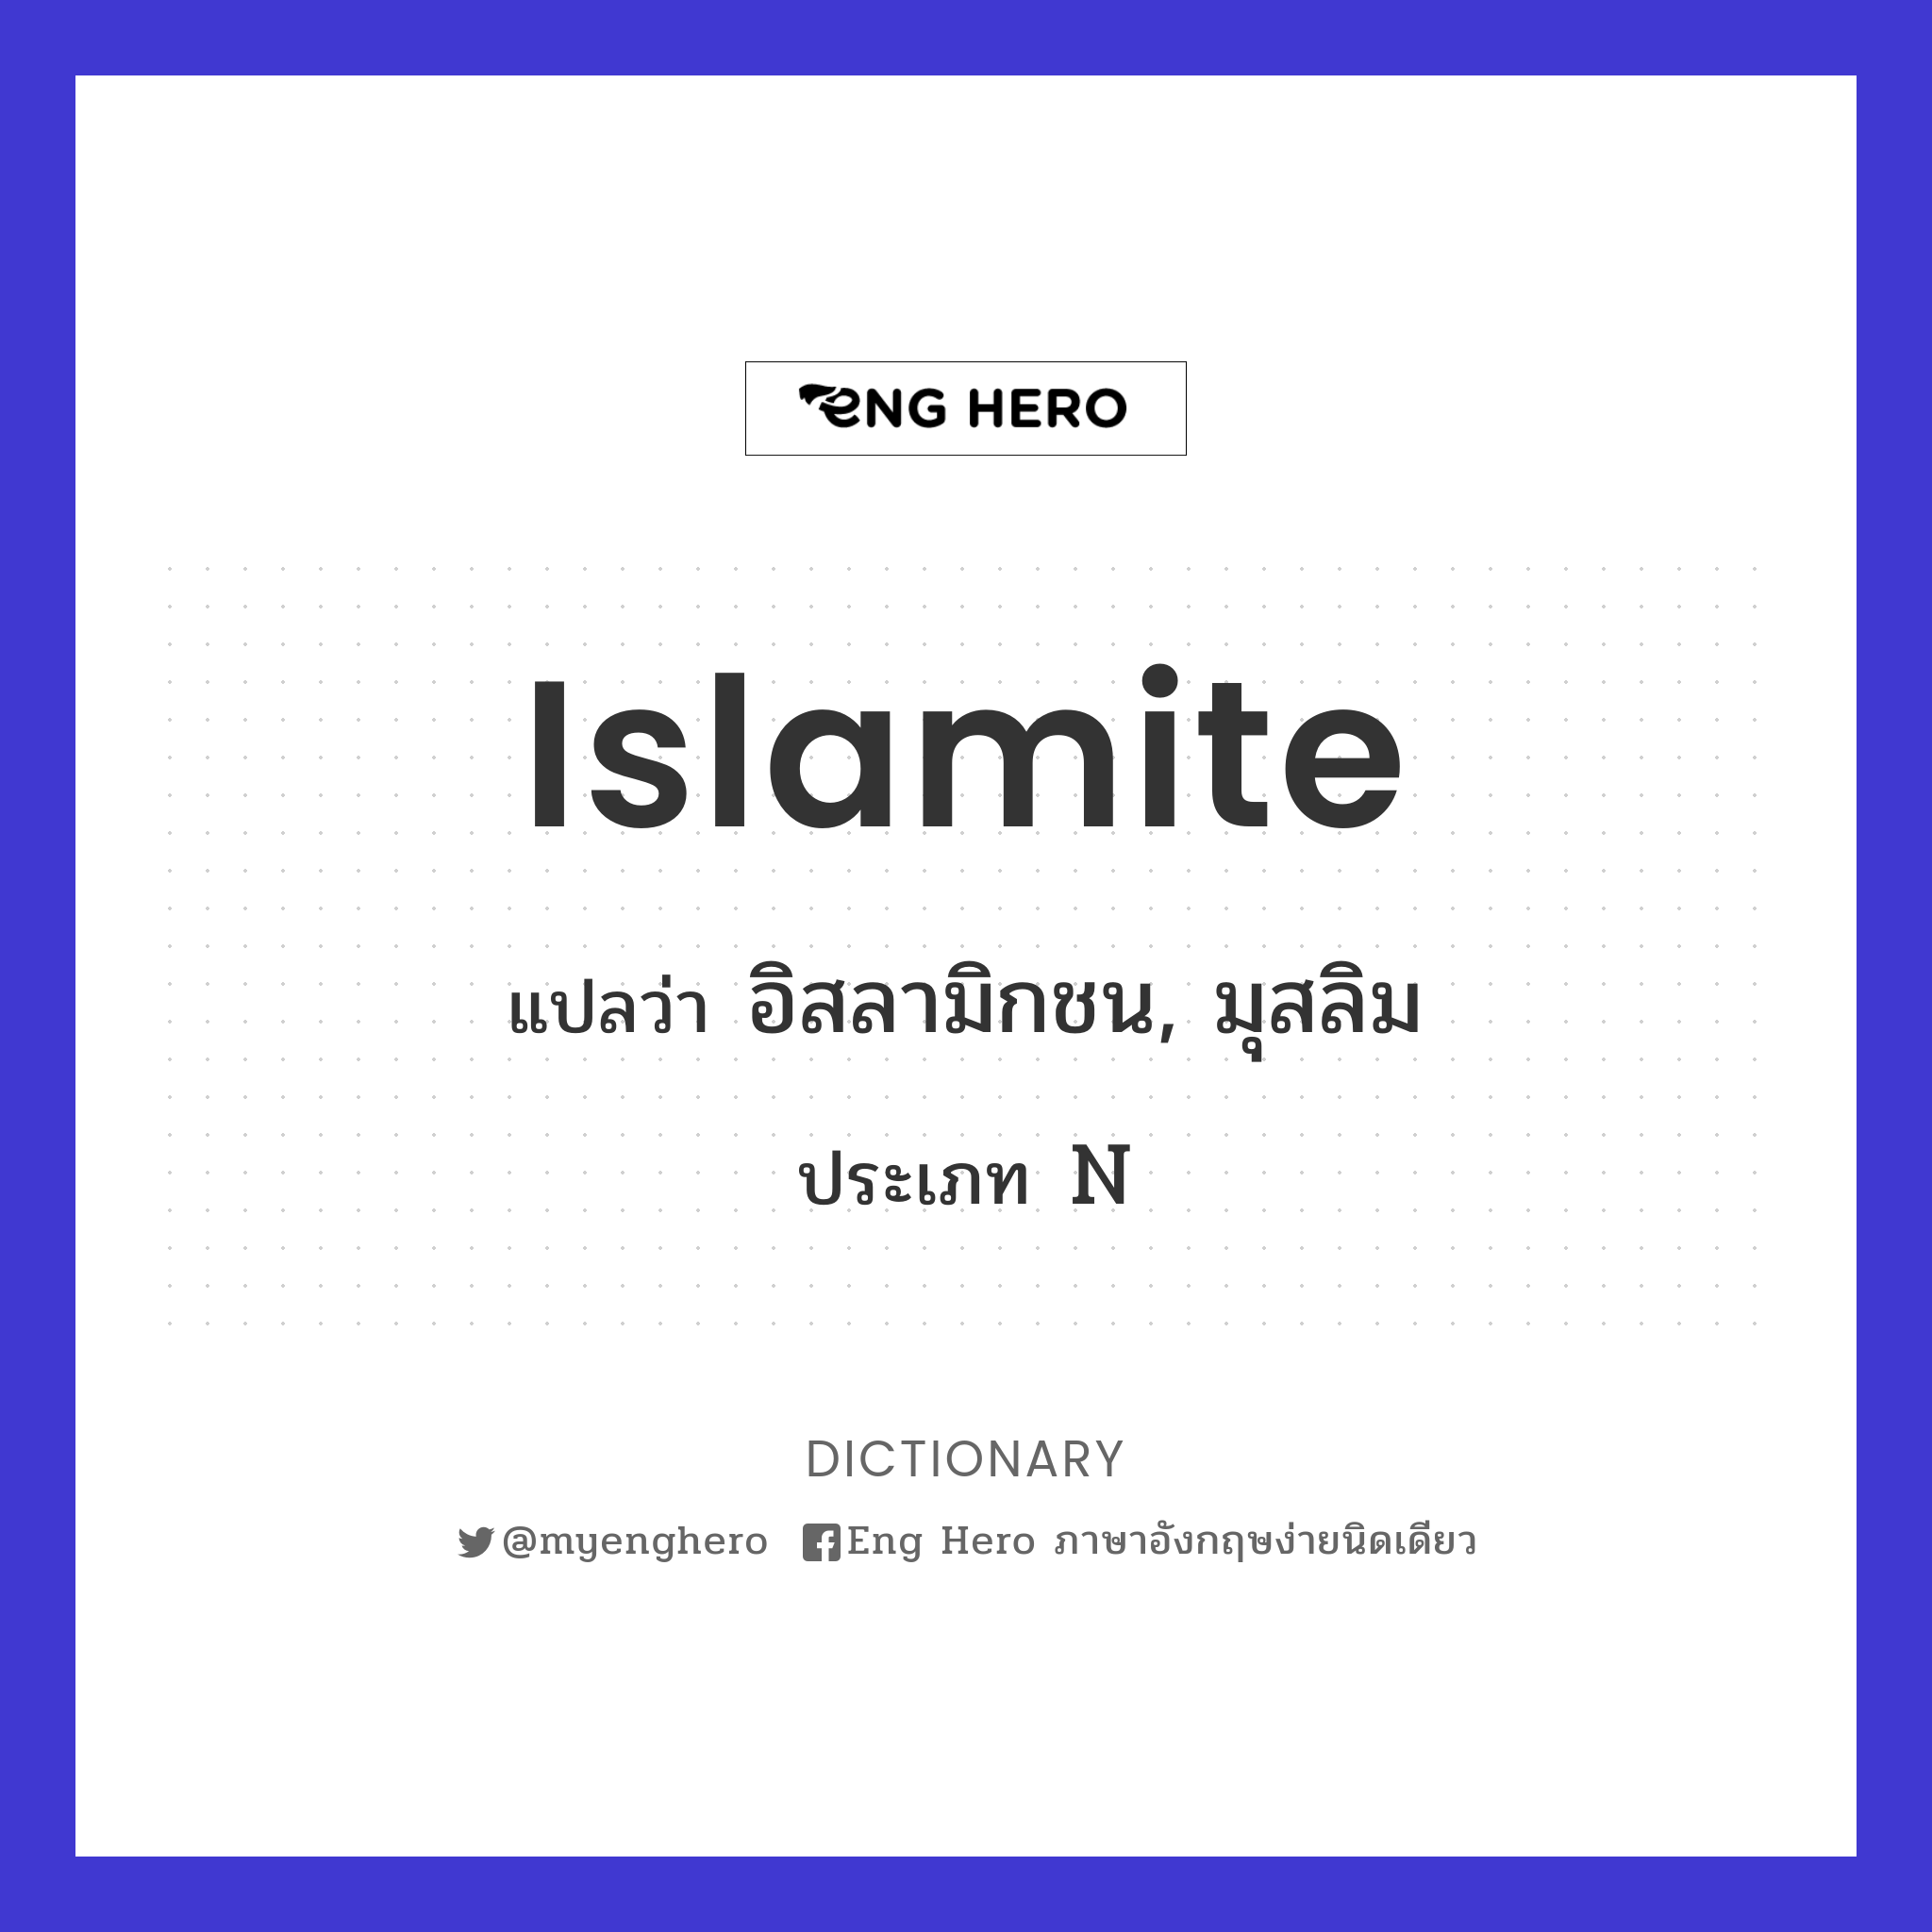 Islamite